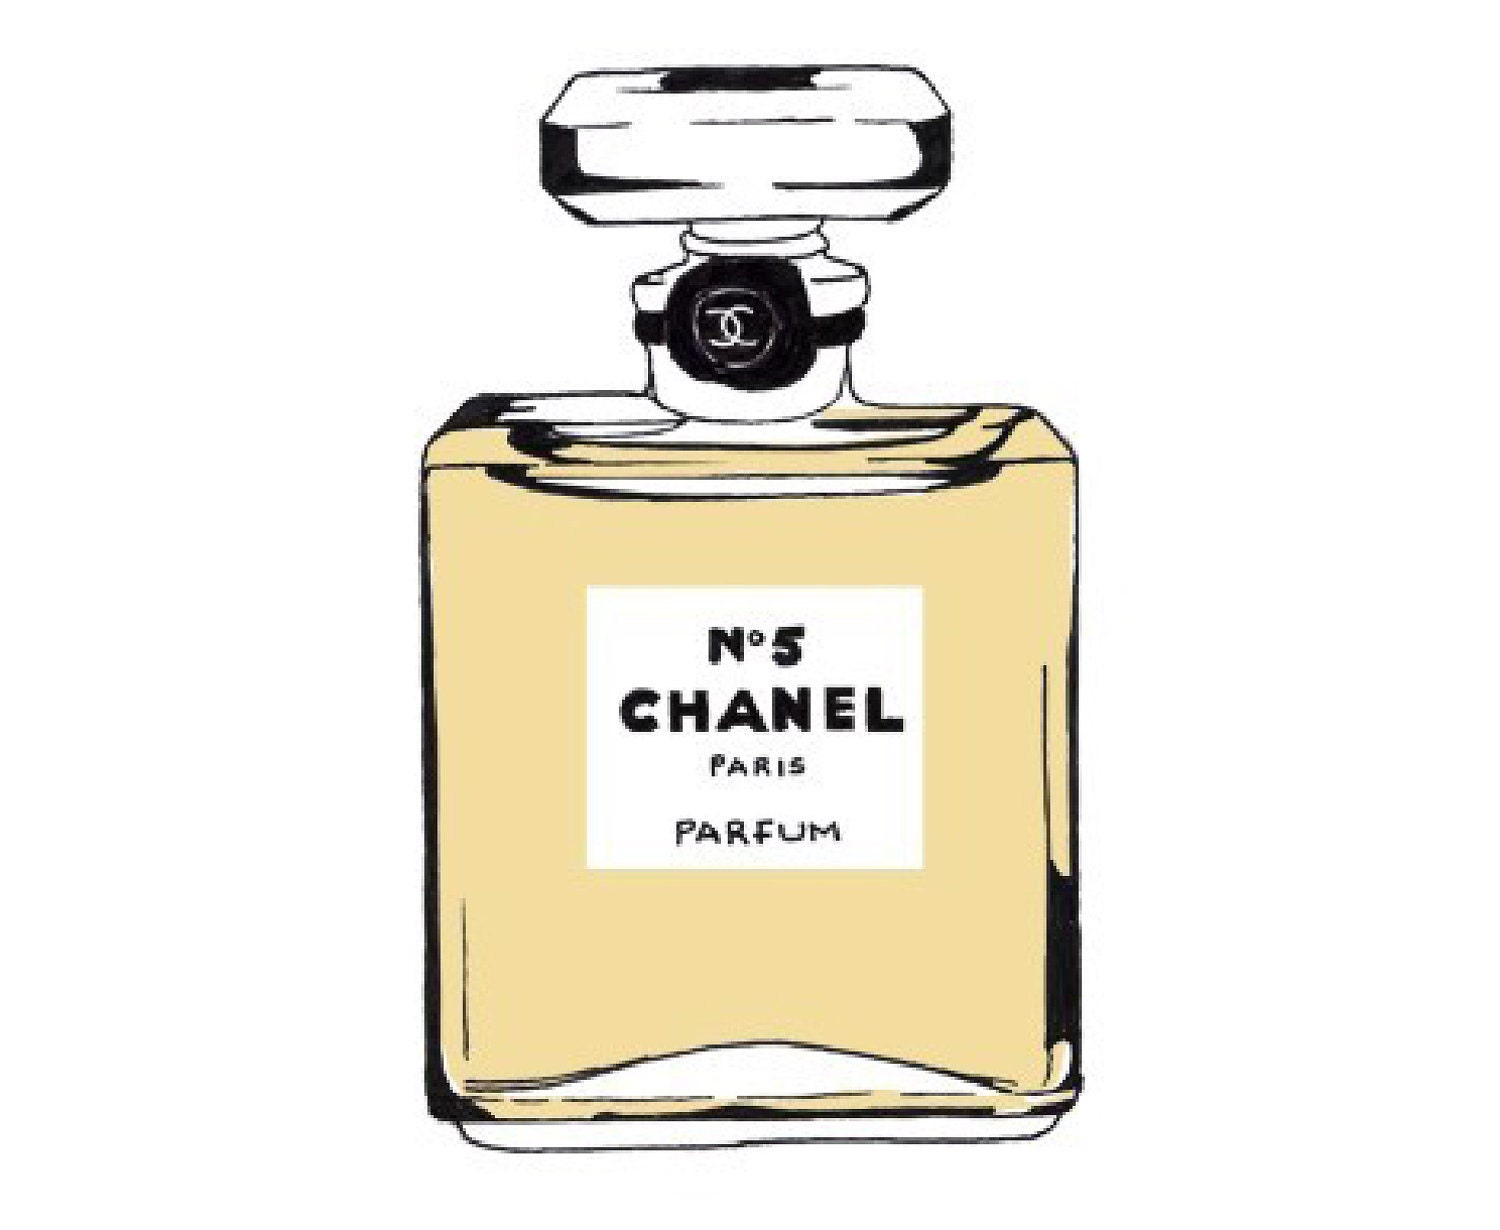 Chanel No.5 Illustration Perfume Bottle Fashion by pencilstitches